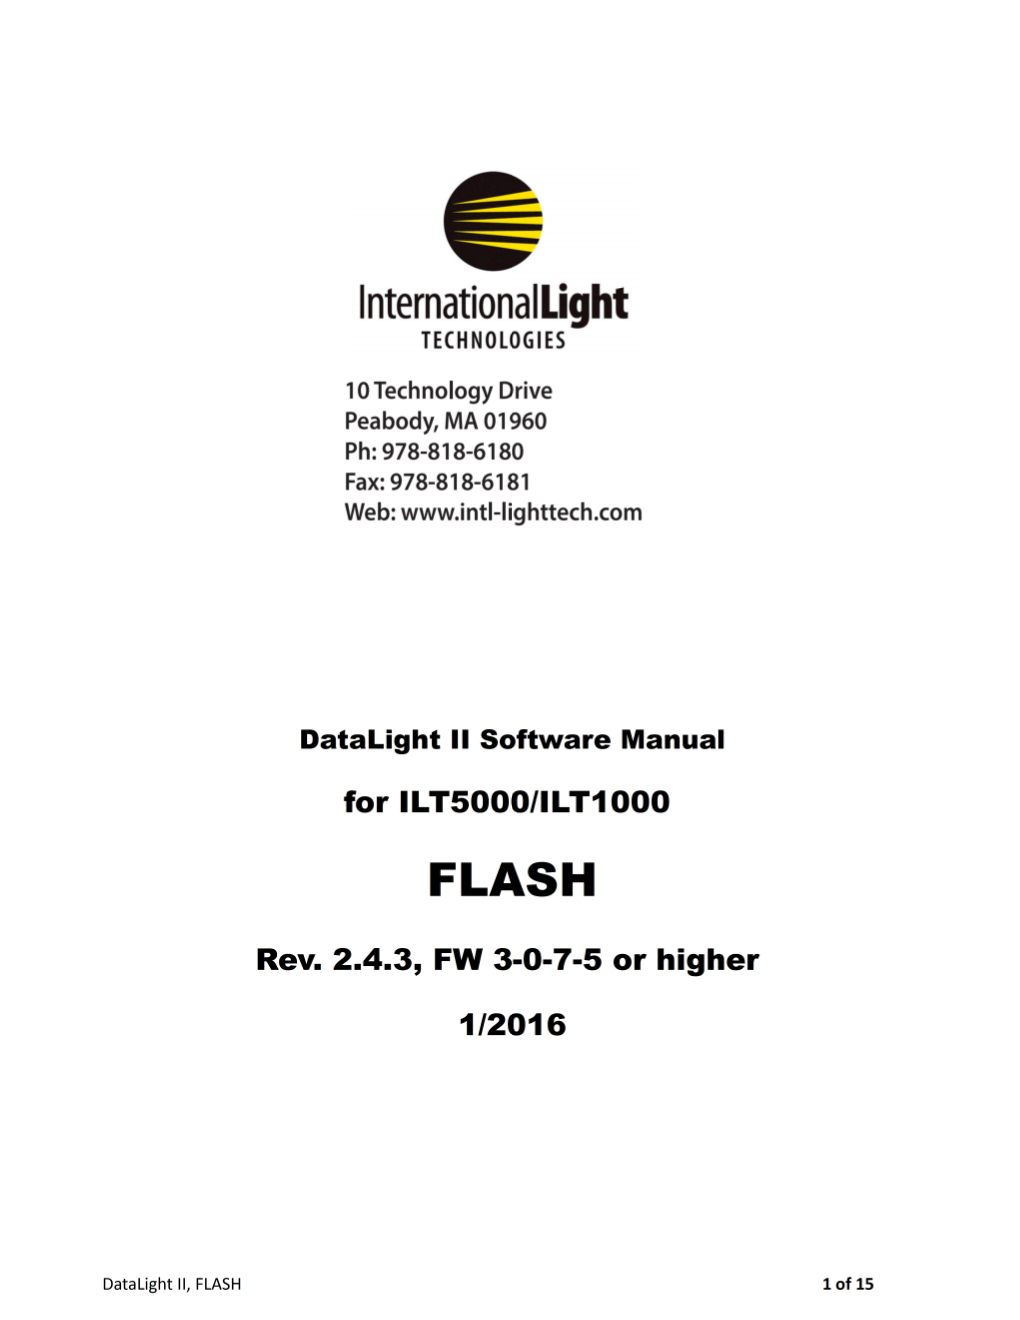 Datalight Flash Light Monitoring Methods